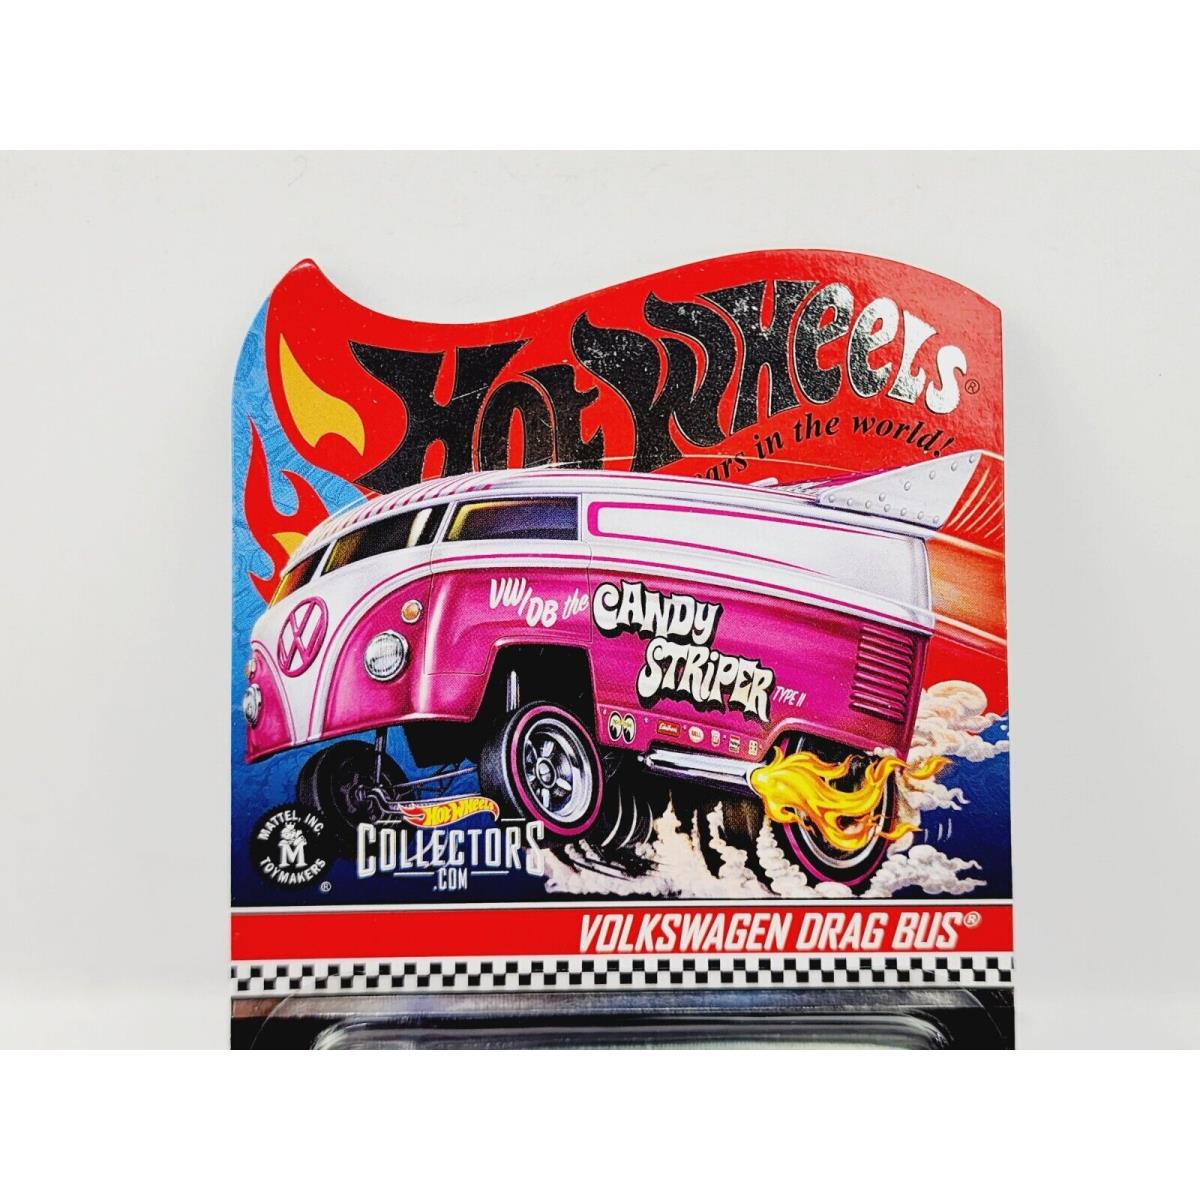 Hot Wheels Rlc Candy Striper Volkswagen Drag Bus 892 Very Nice N535